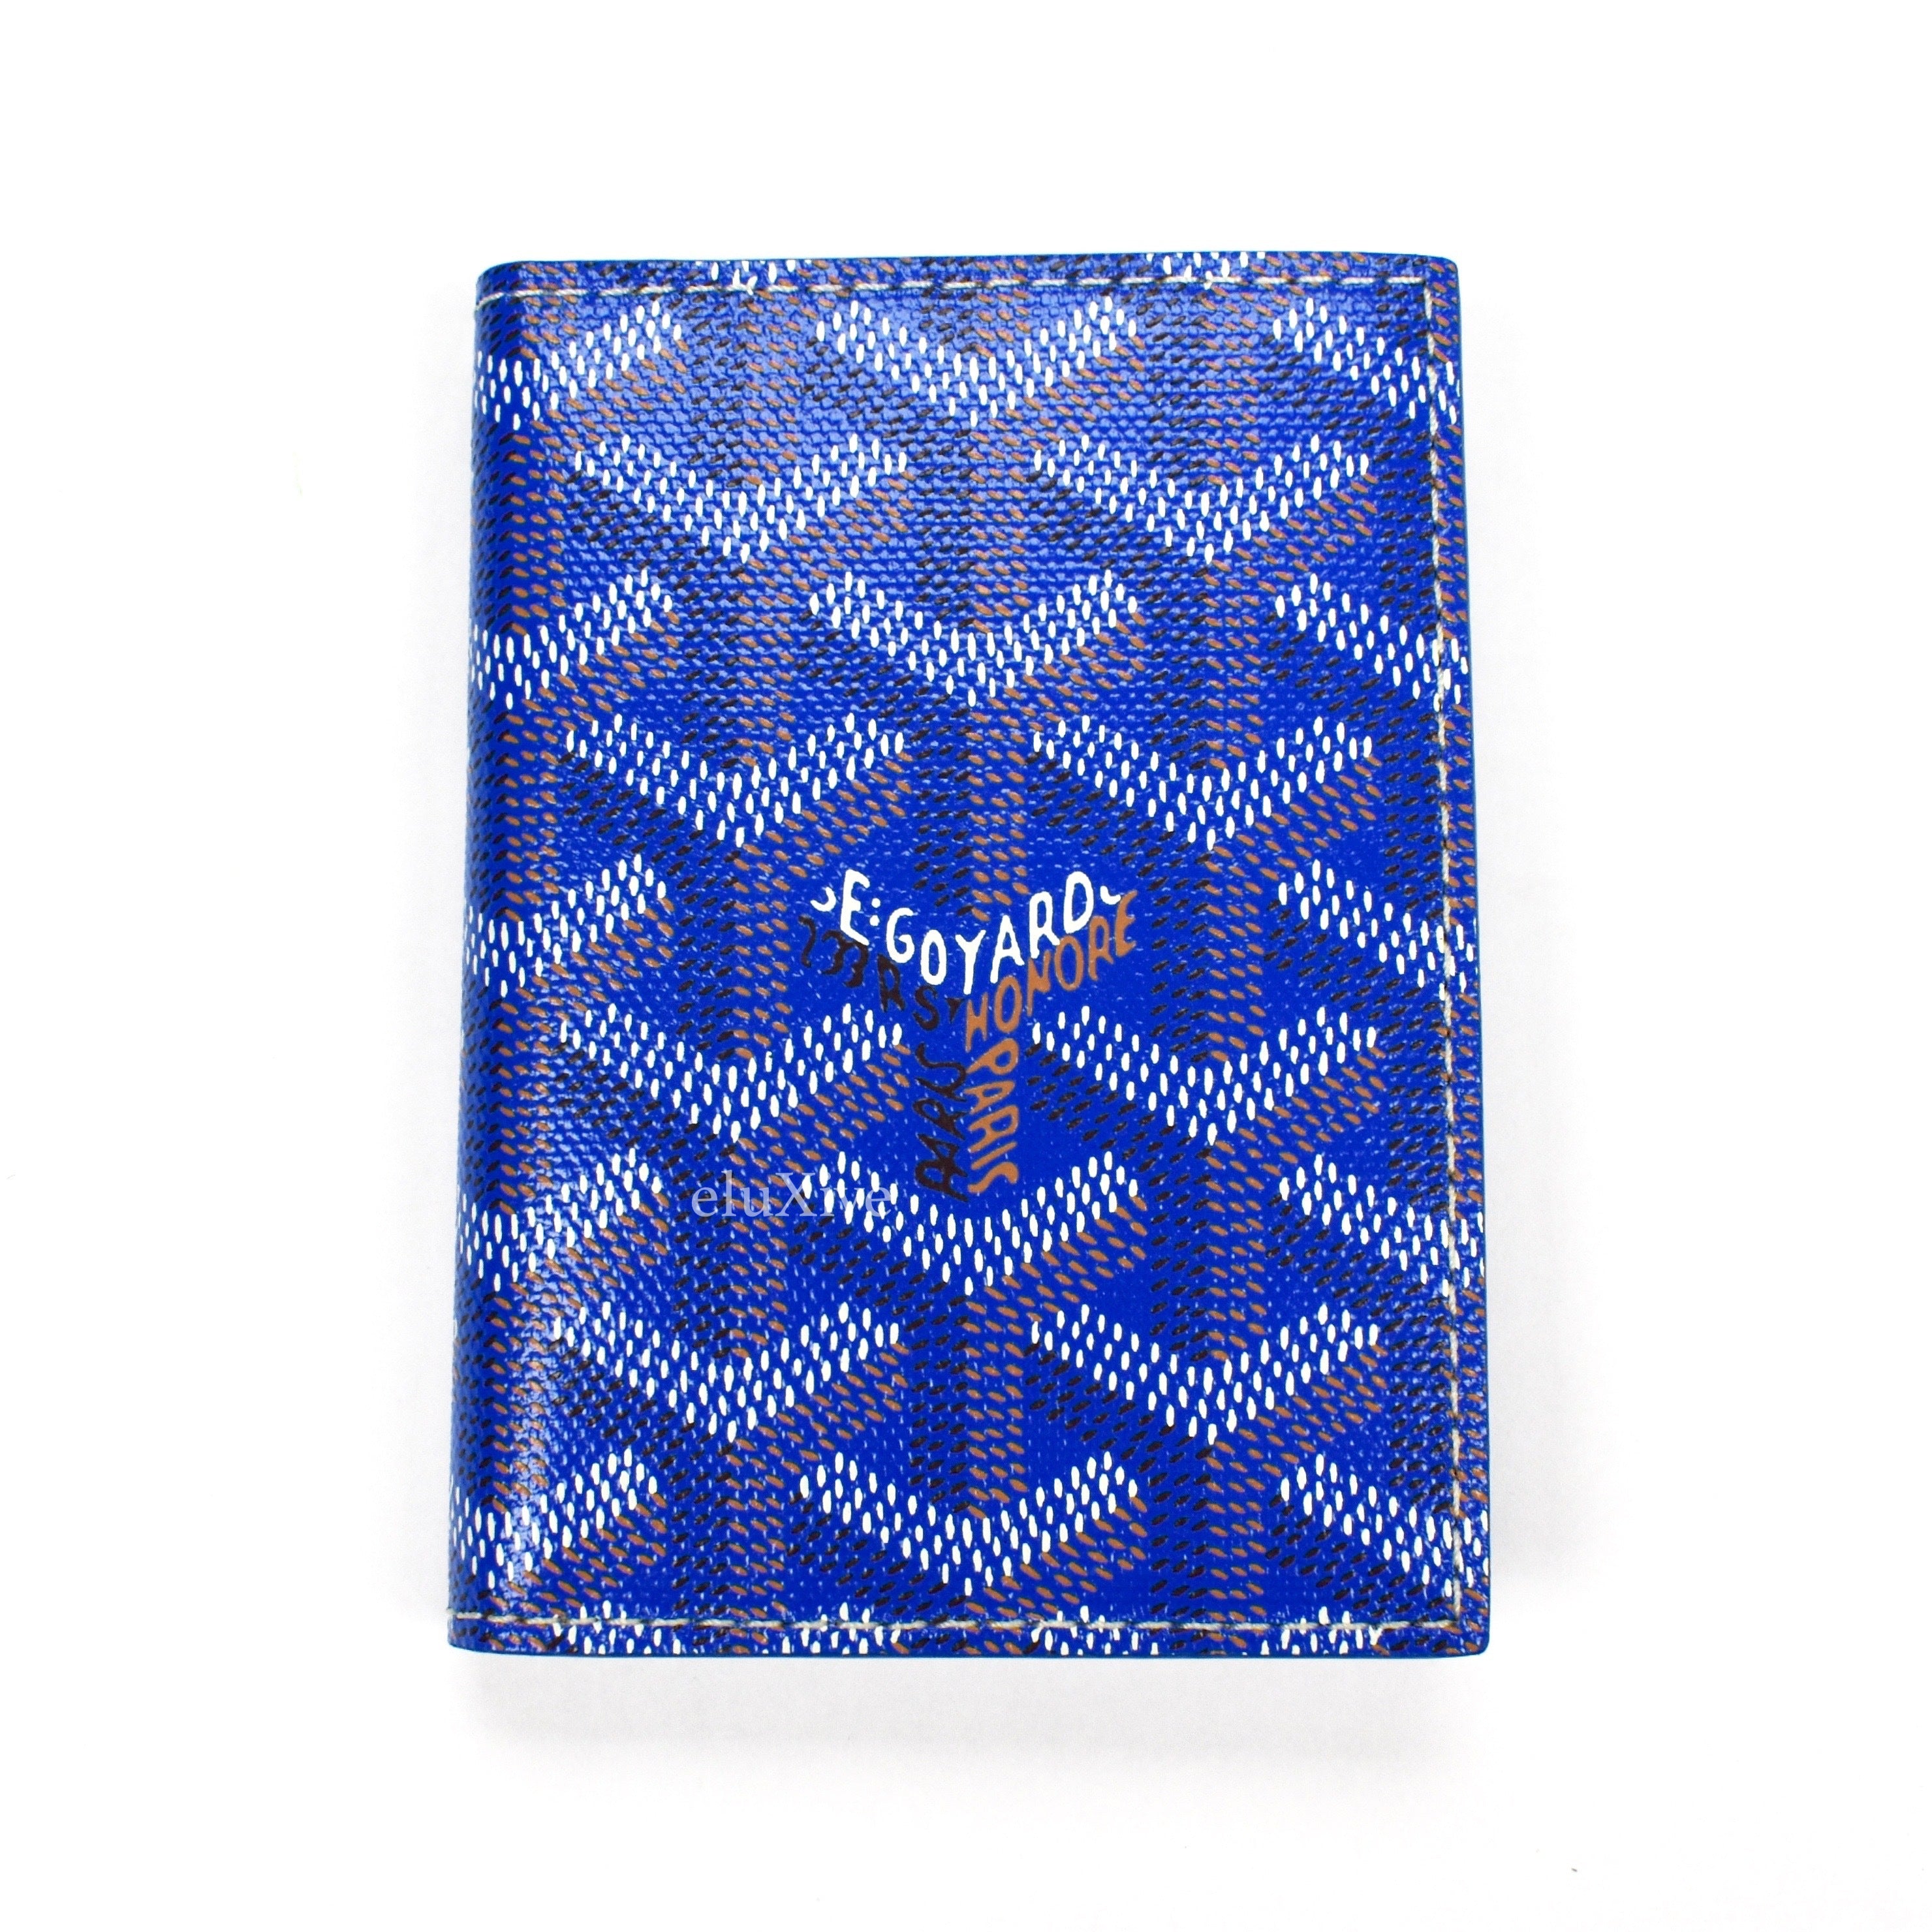 Goyard - Saint Marc Bifold Card Holder (Sky Blue) – eluXive